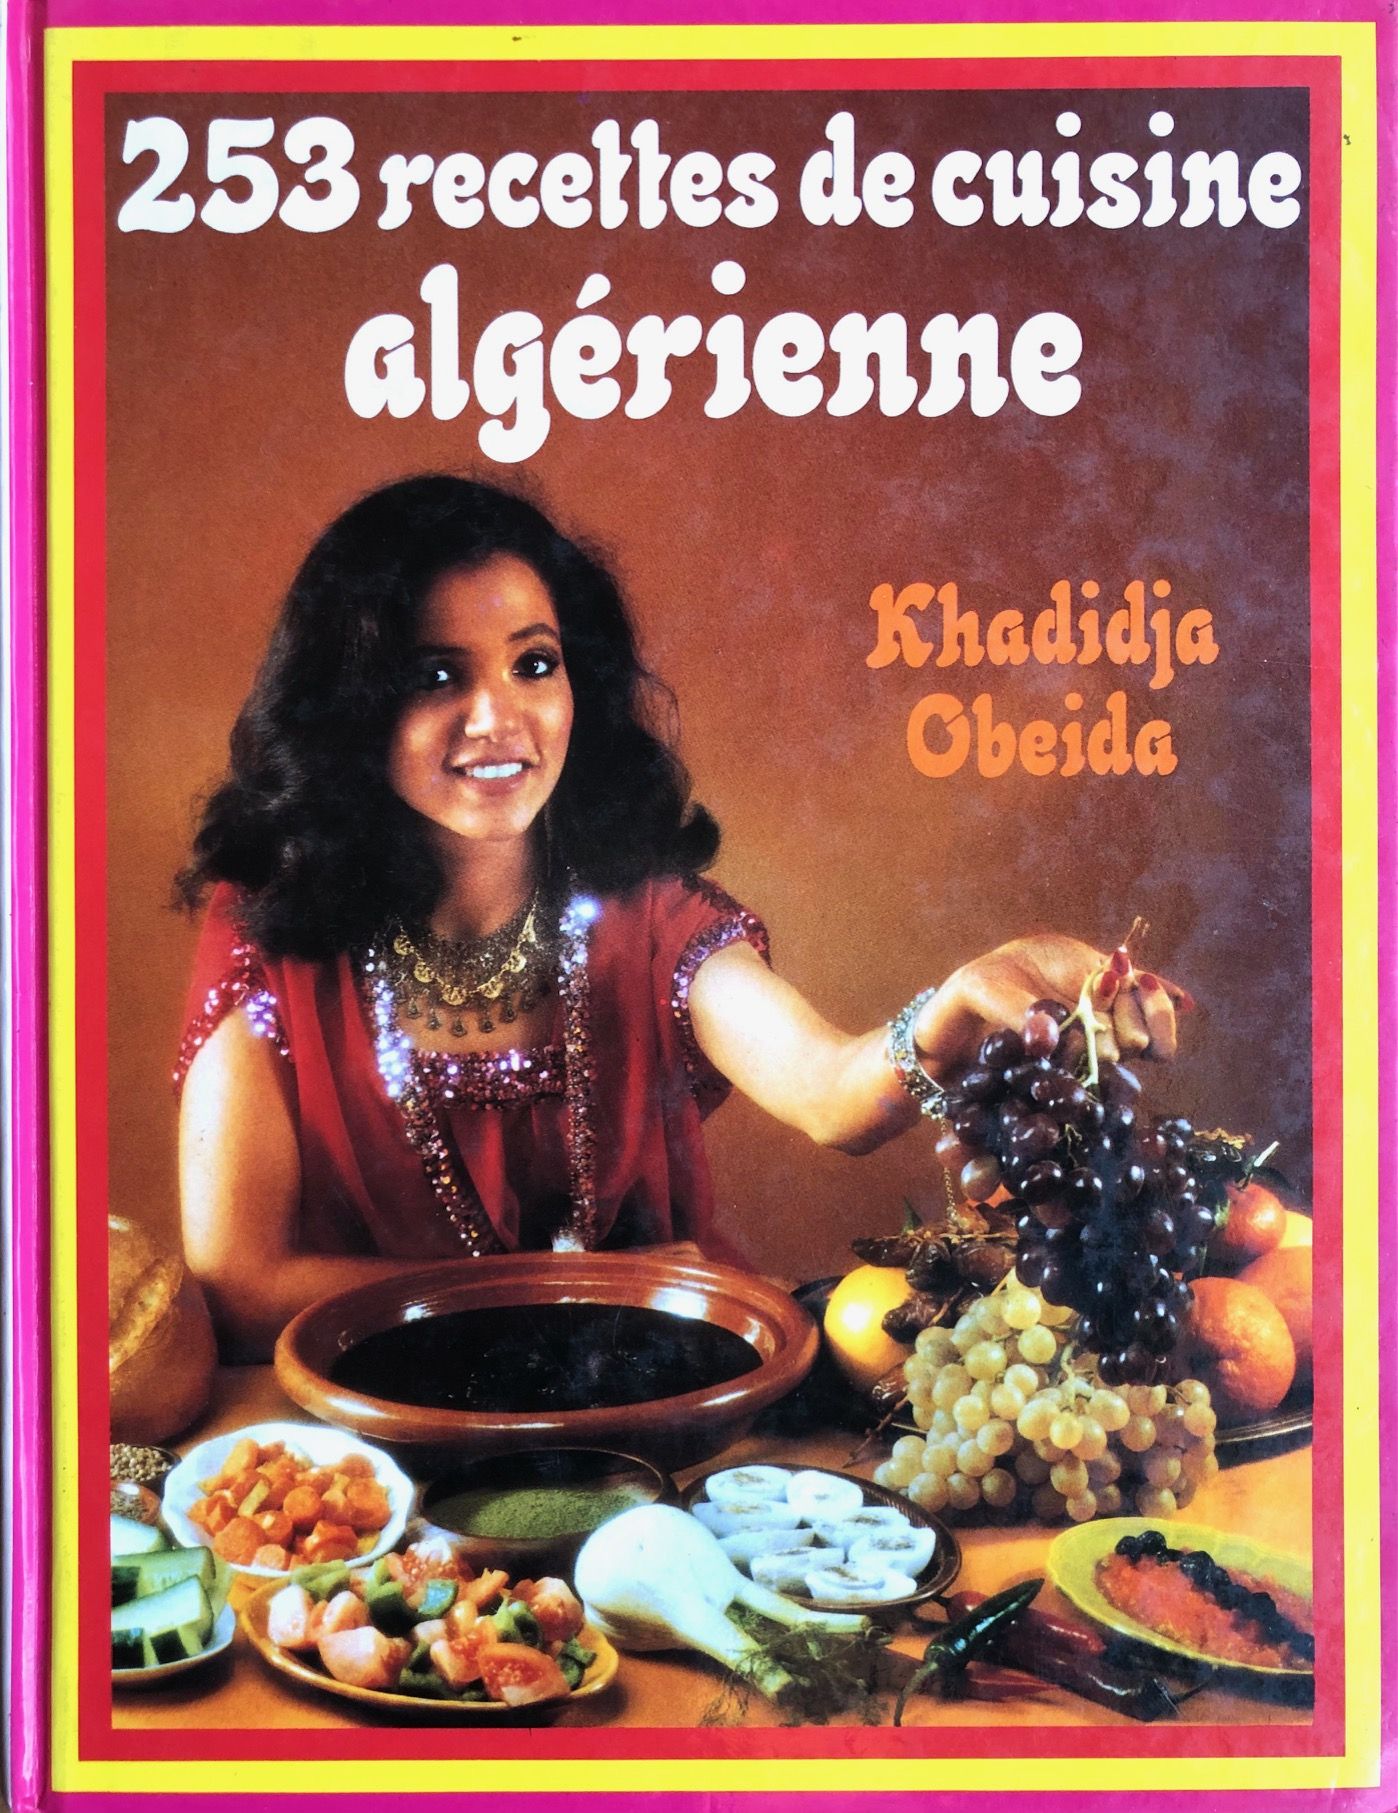 (*NEW ARRIVAL*) (North African) Khadidja Obeida. 253 Recettes de Cuisine Algerienne